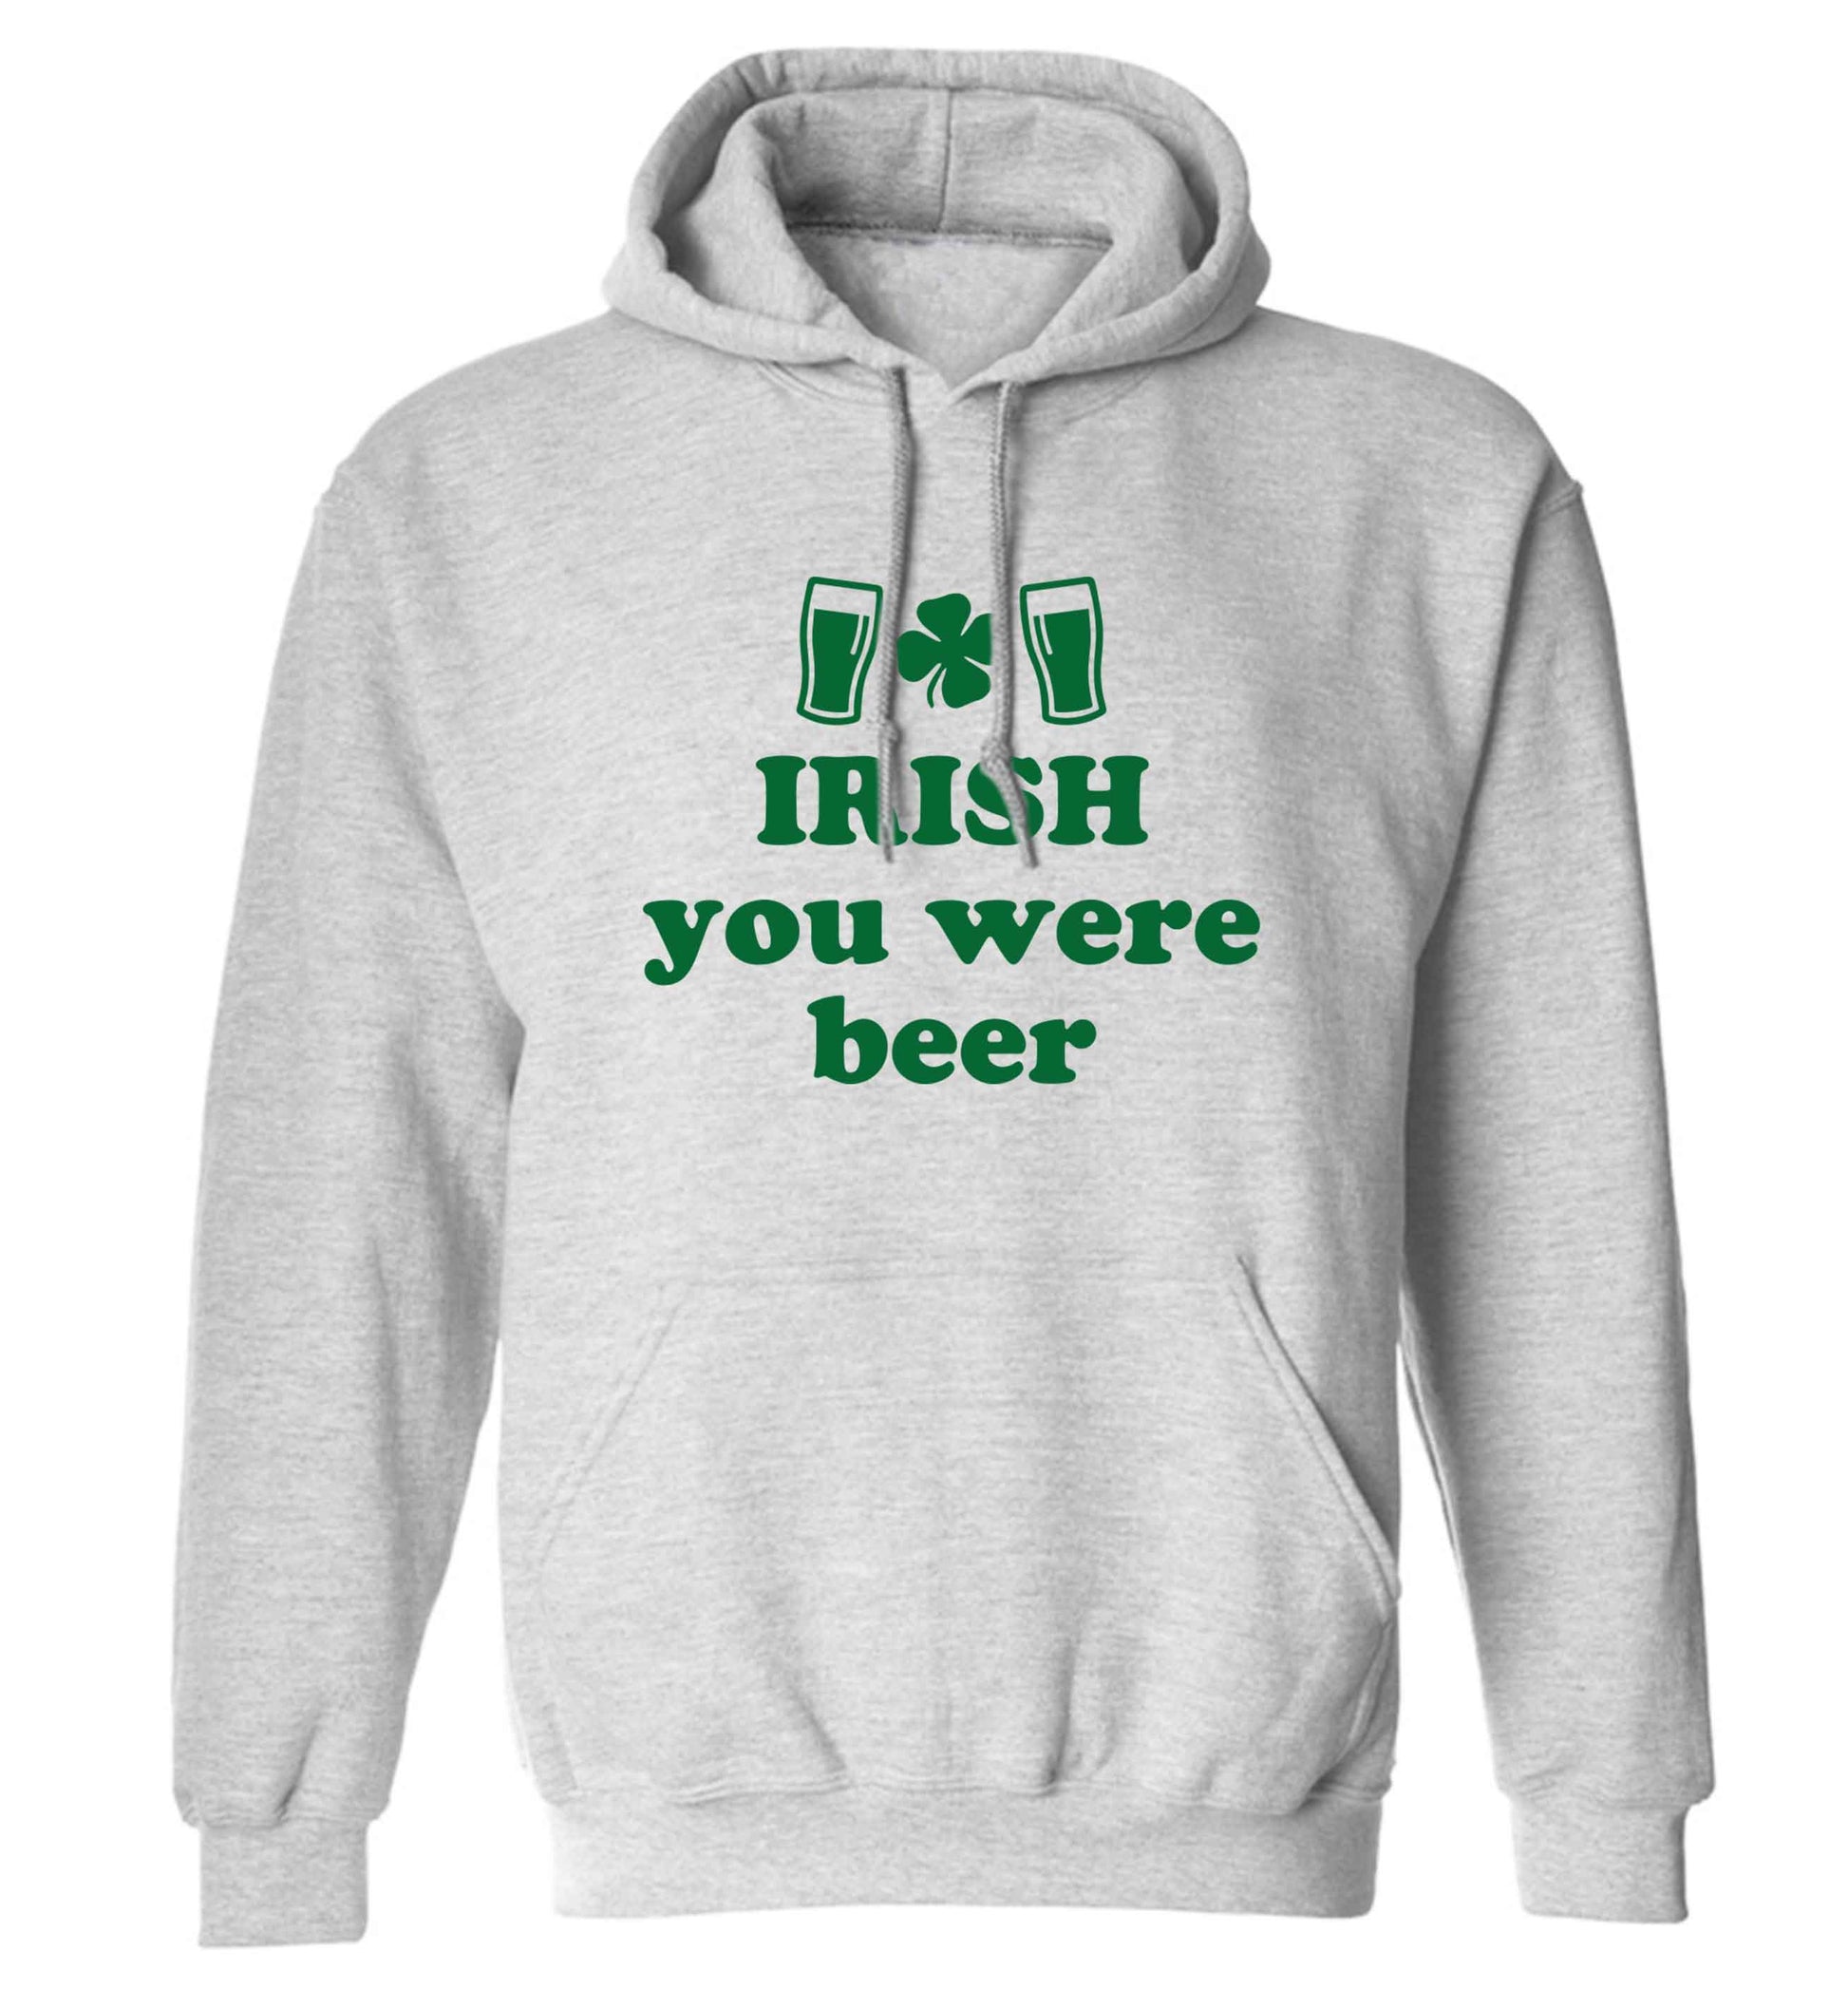 Irish you were beer adults unisex grey hoodie 2XL